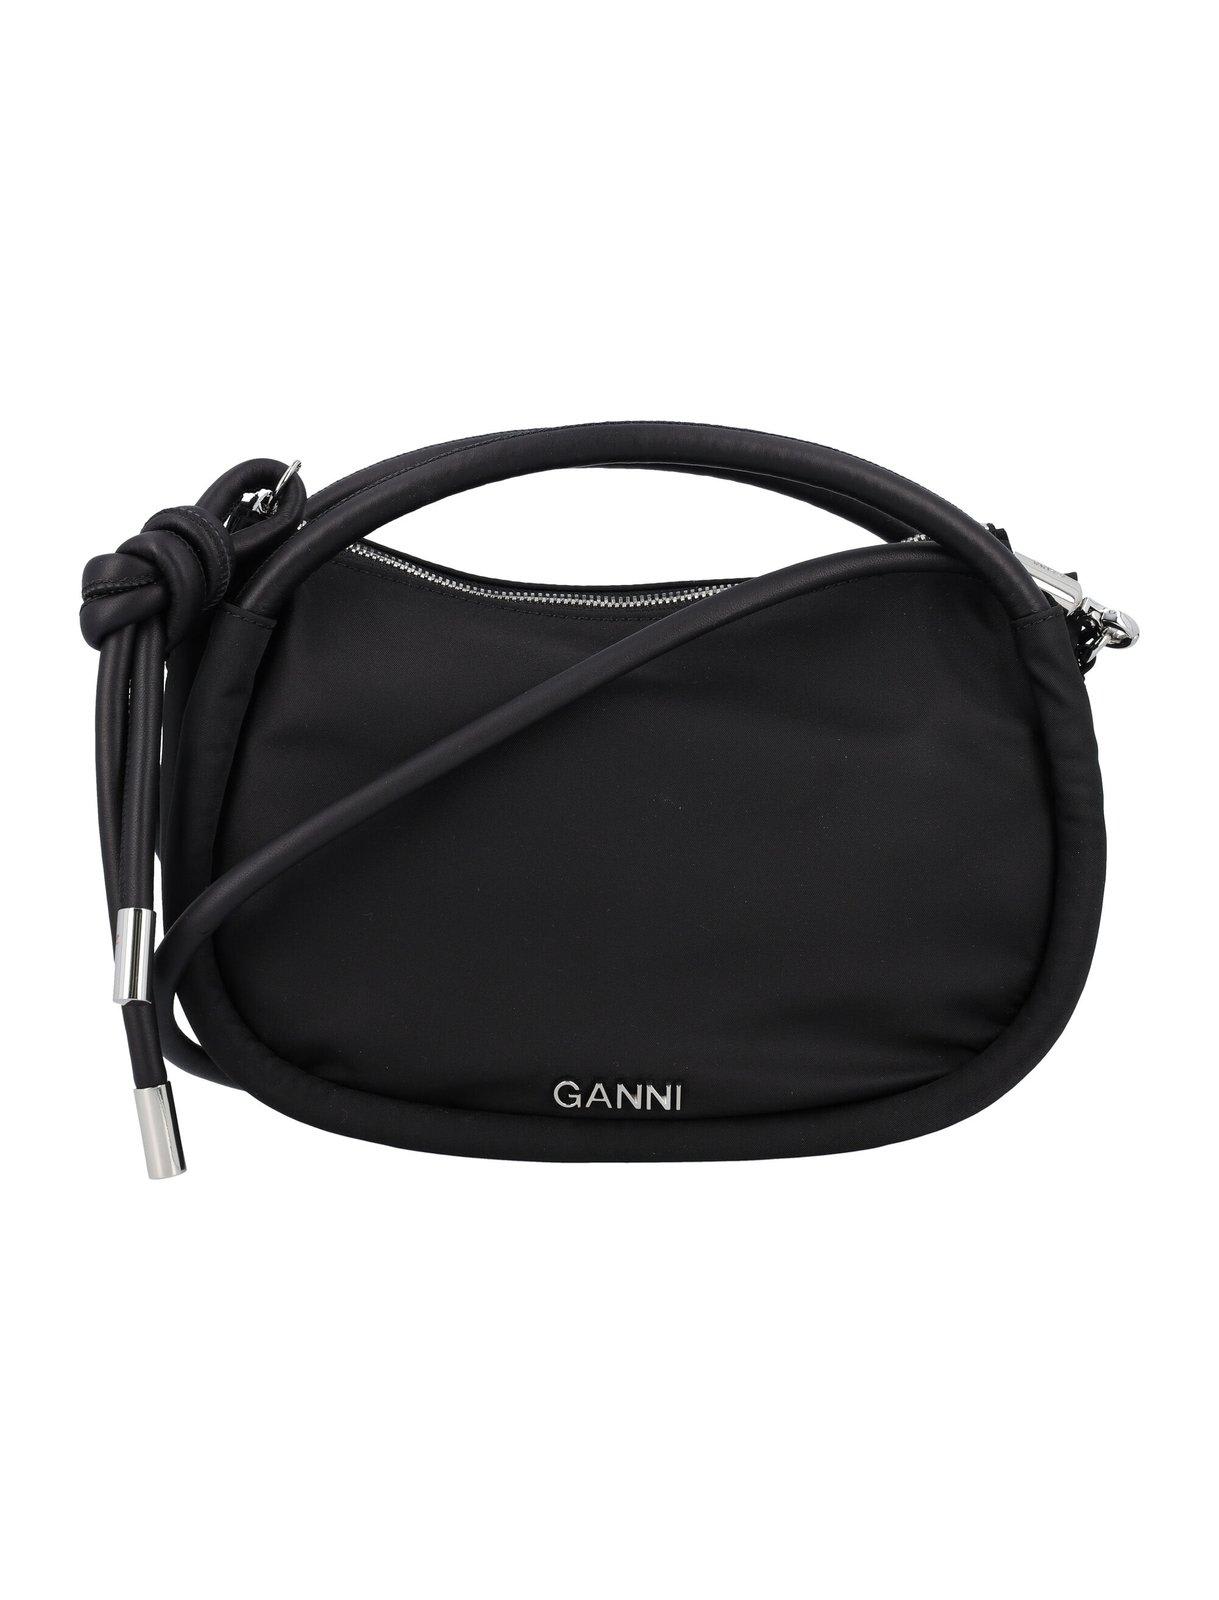 Ganni Knot-detailed Top Handle Bag